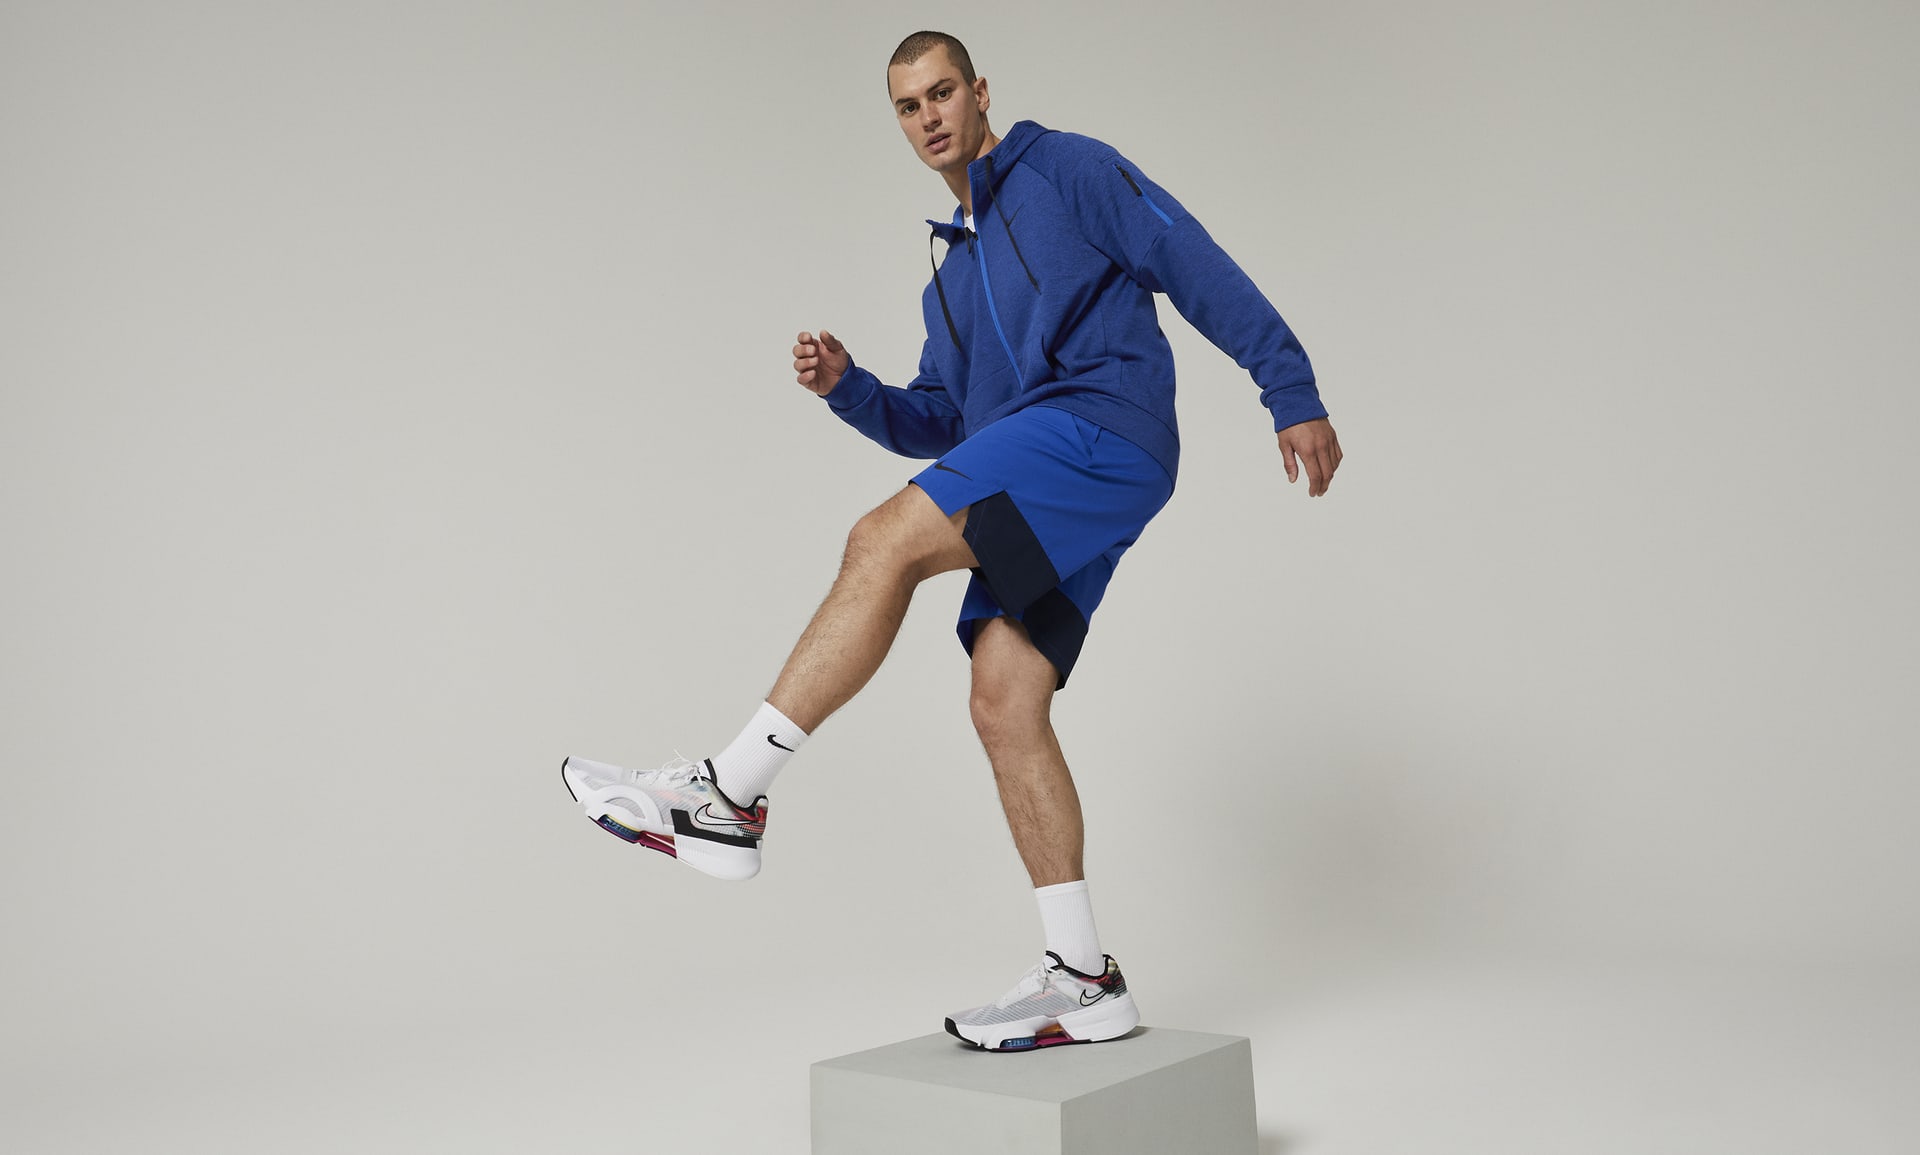 Nike Men's Therma-FIT Full-Zip Fitness Fleece Hoodie, White, Size: 4XL, Fleece/Polyester